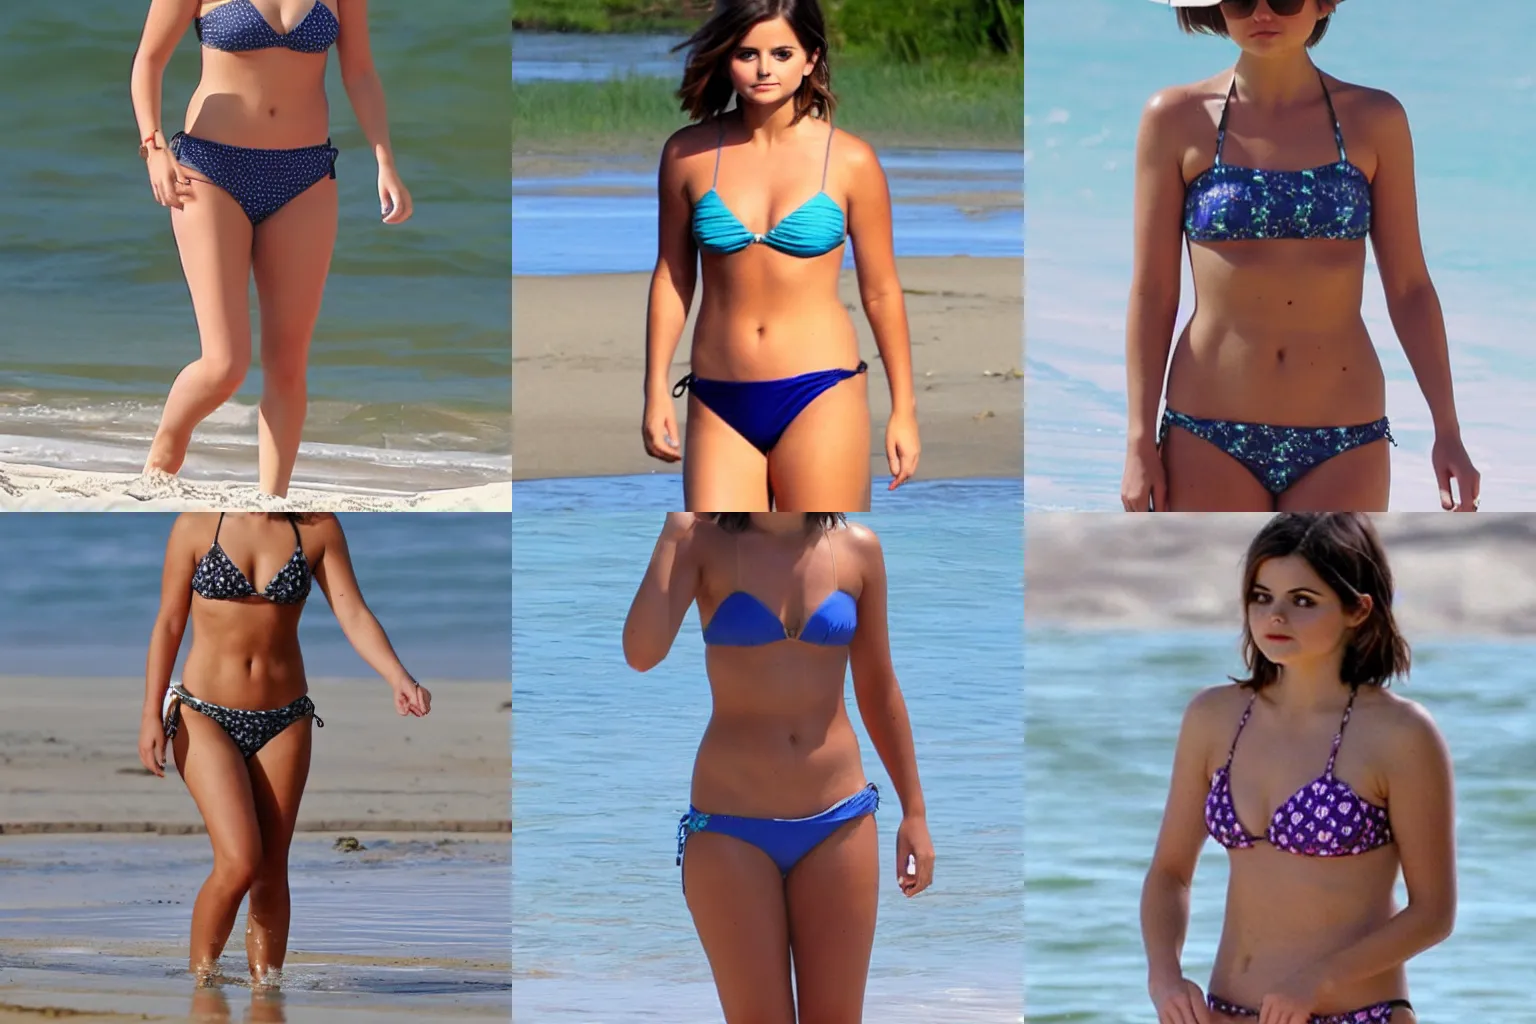 Jenna-Louise Coleman bikini in the beach, photo | Stable Diffusion | OpenArt